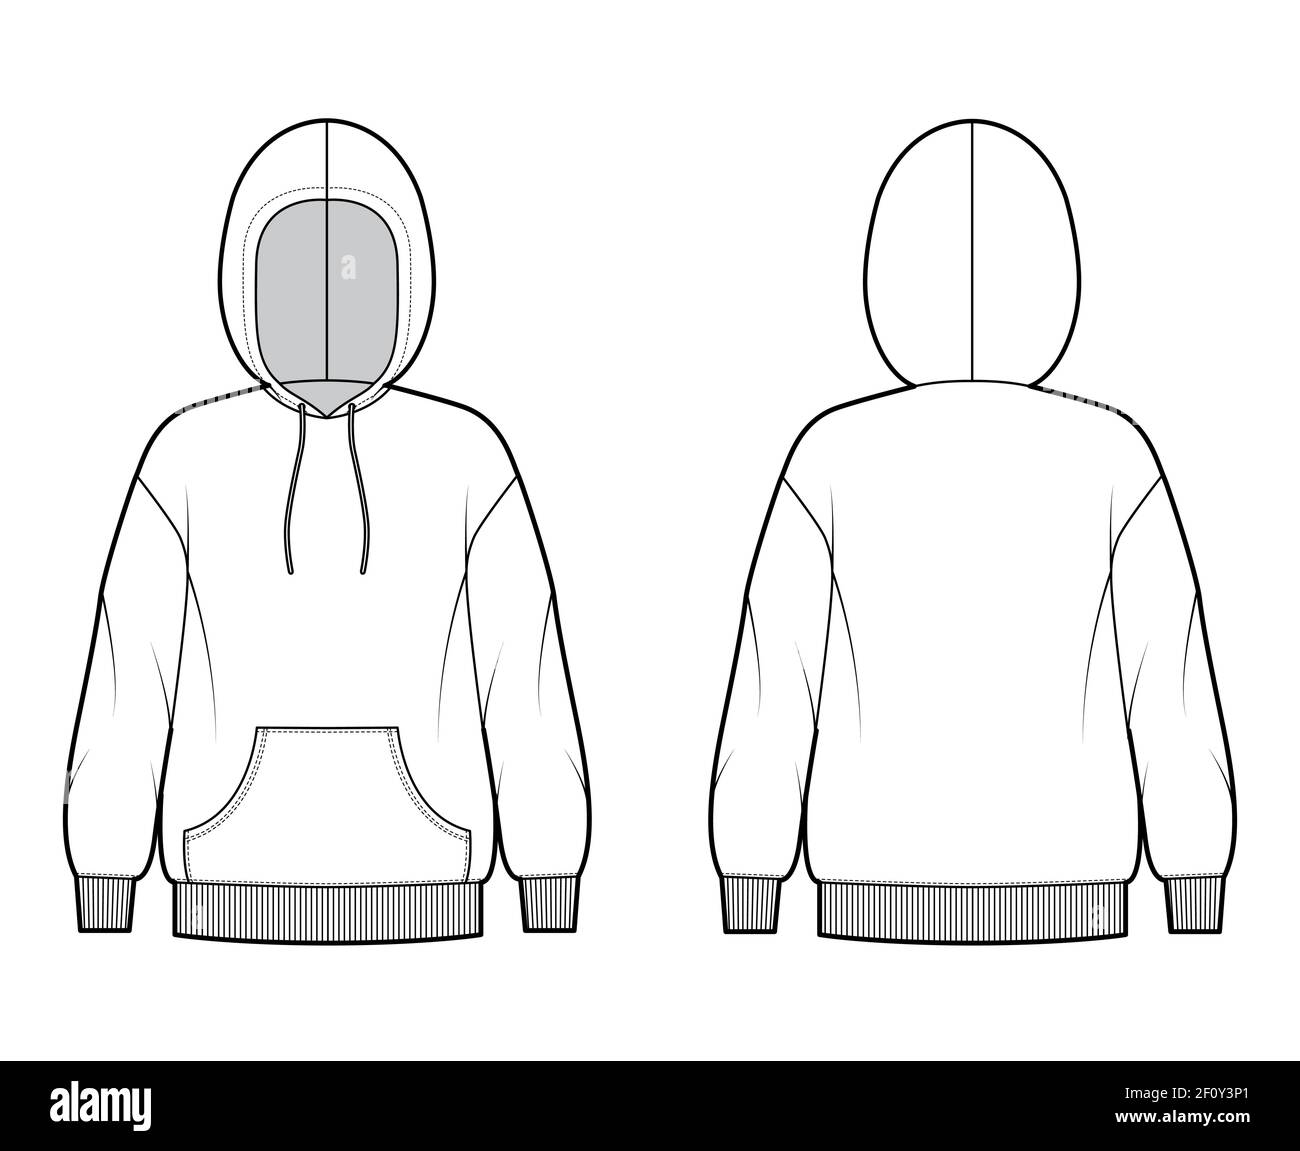 Hoody sweatshirt technical fashion illustration with long sleeves ...